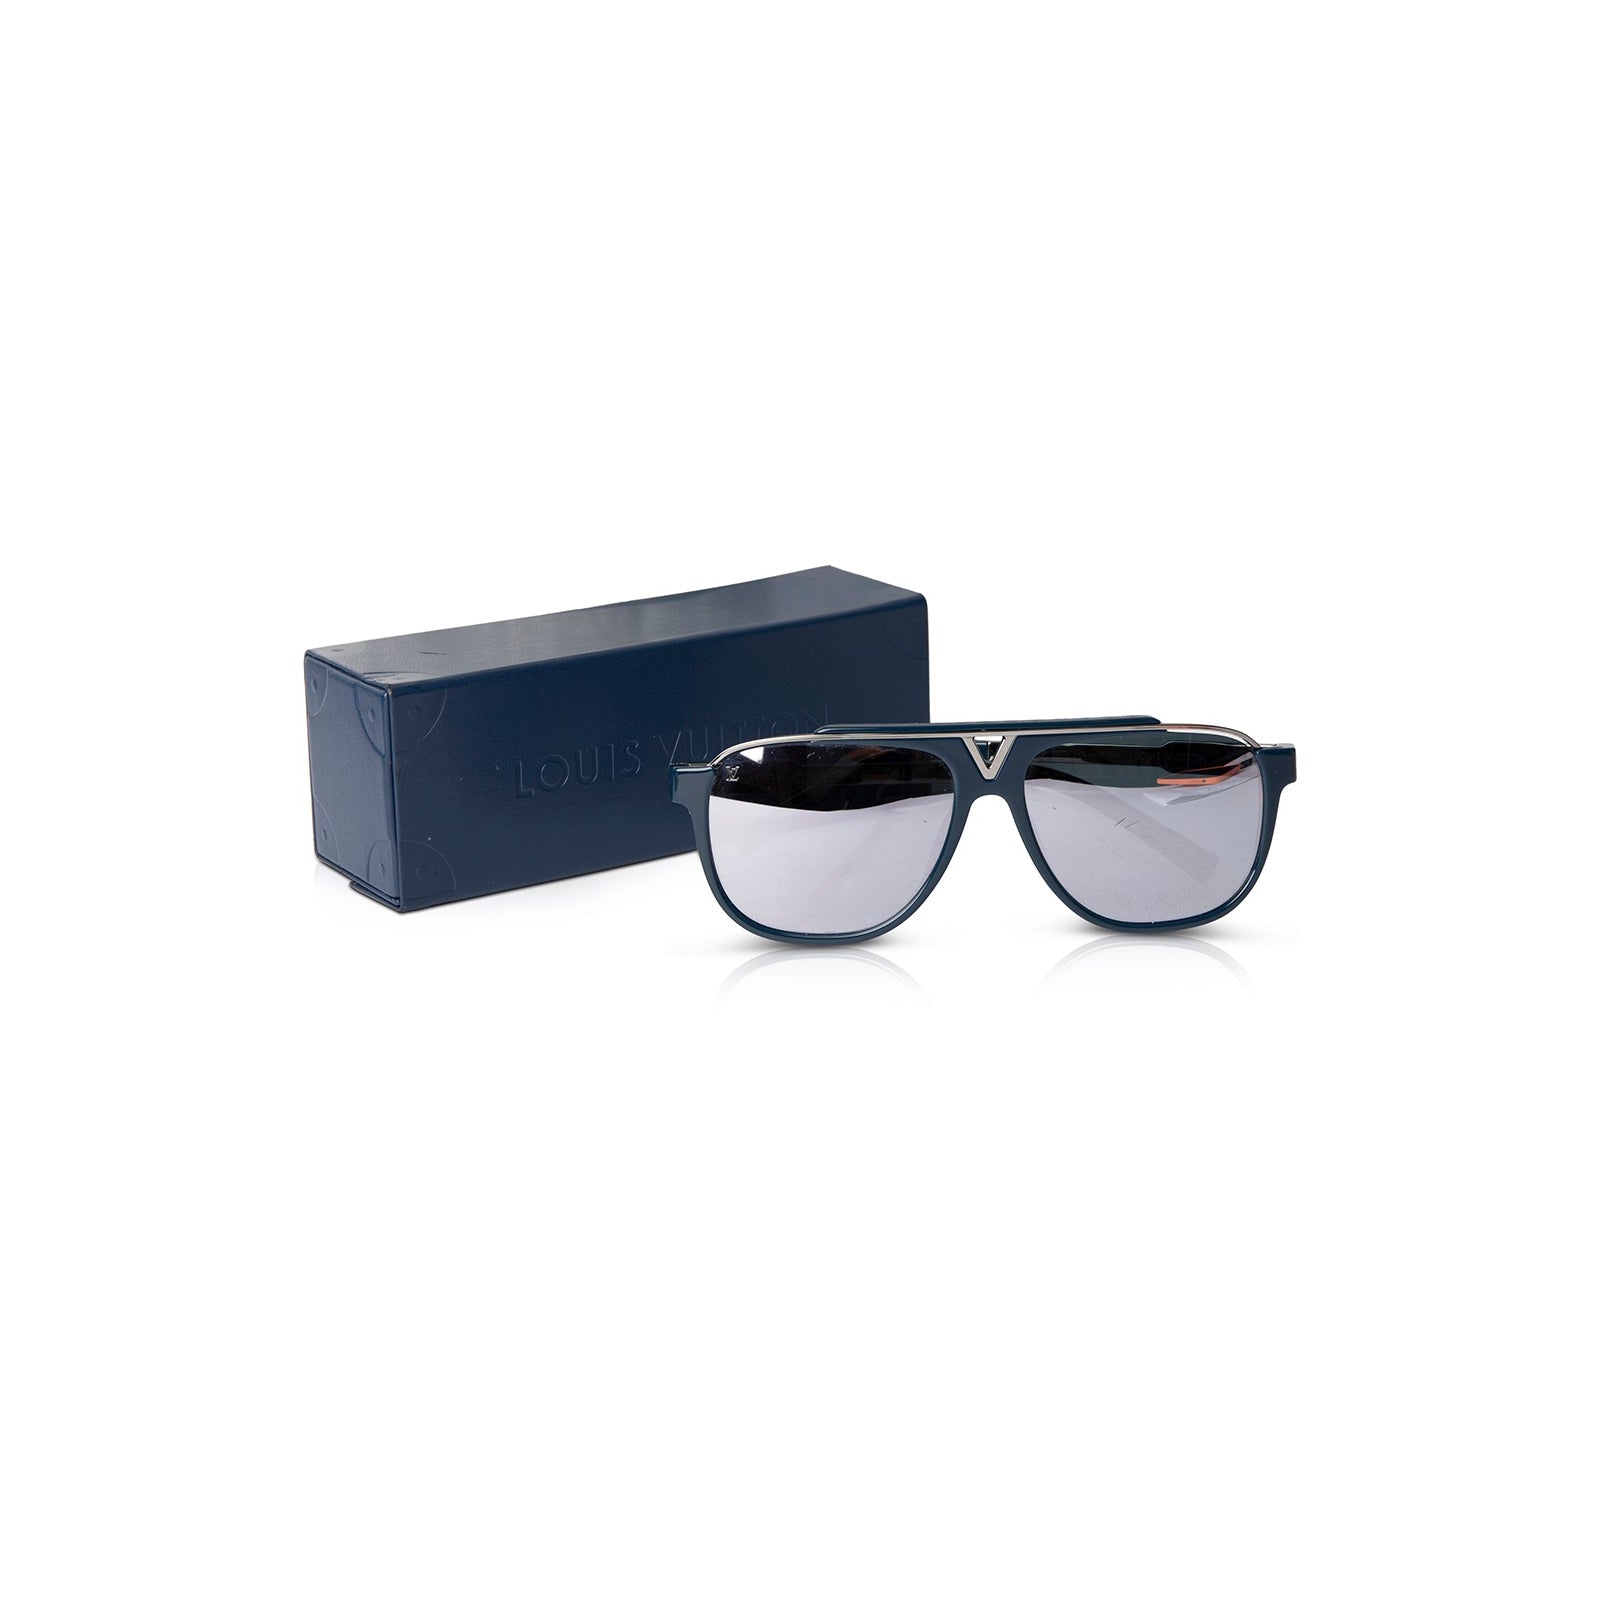 Louis Vuitton Mascot Sunglasses w/ Box – Oliver Jewellery